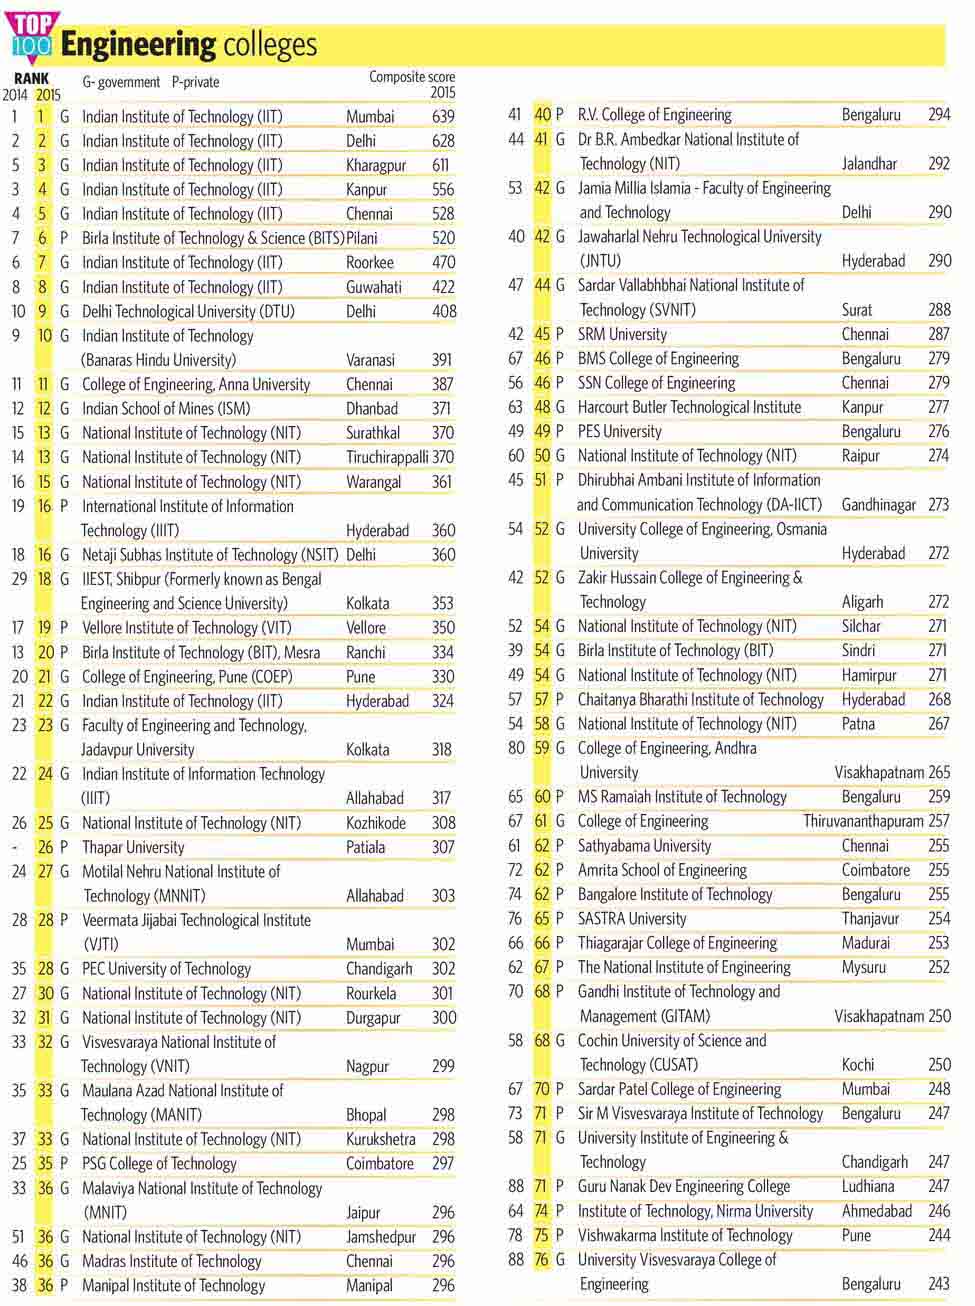 72-1-TOP-100-Engineering-colleges